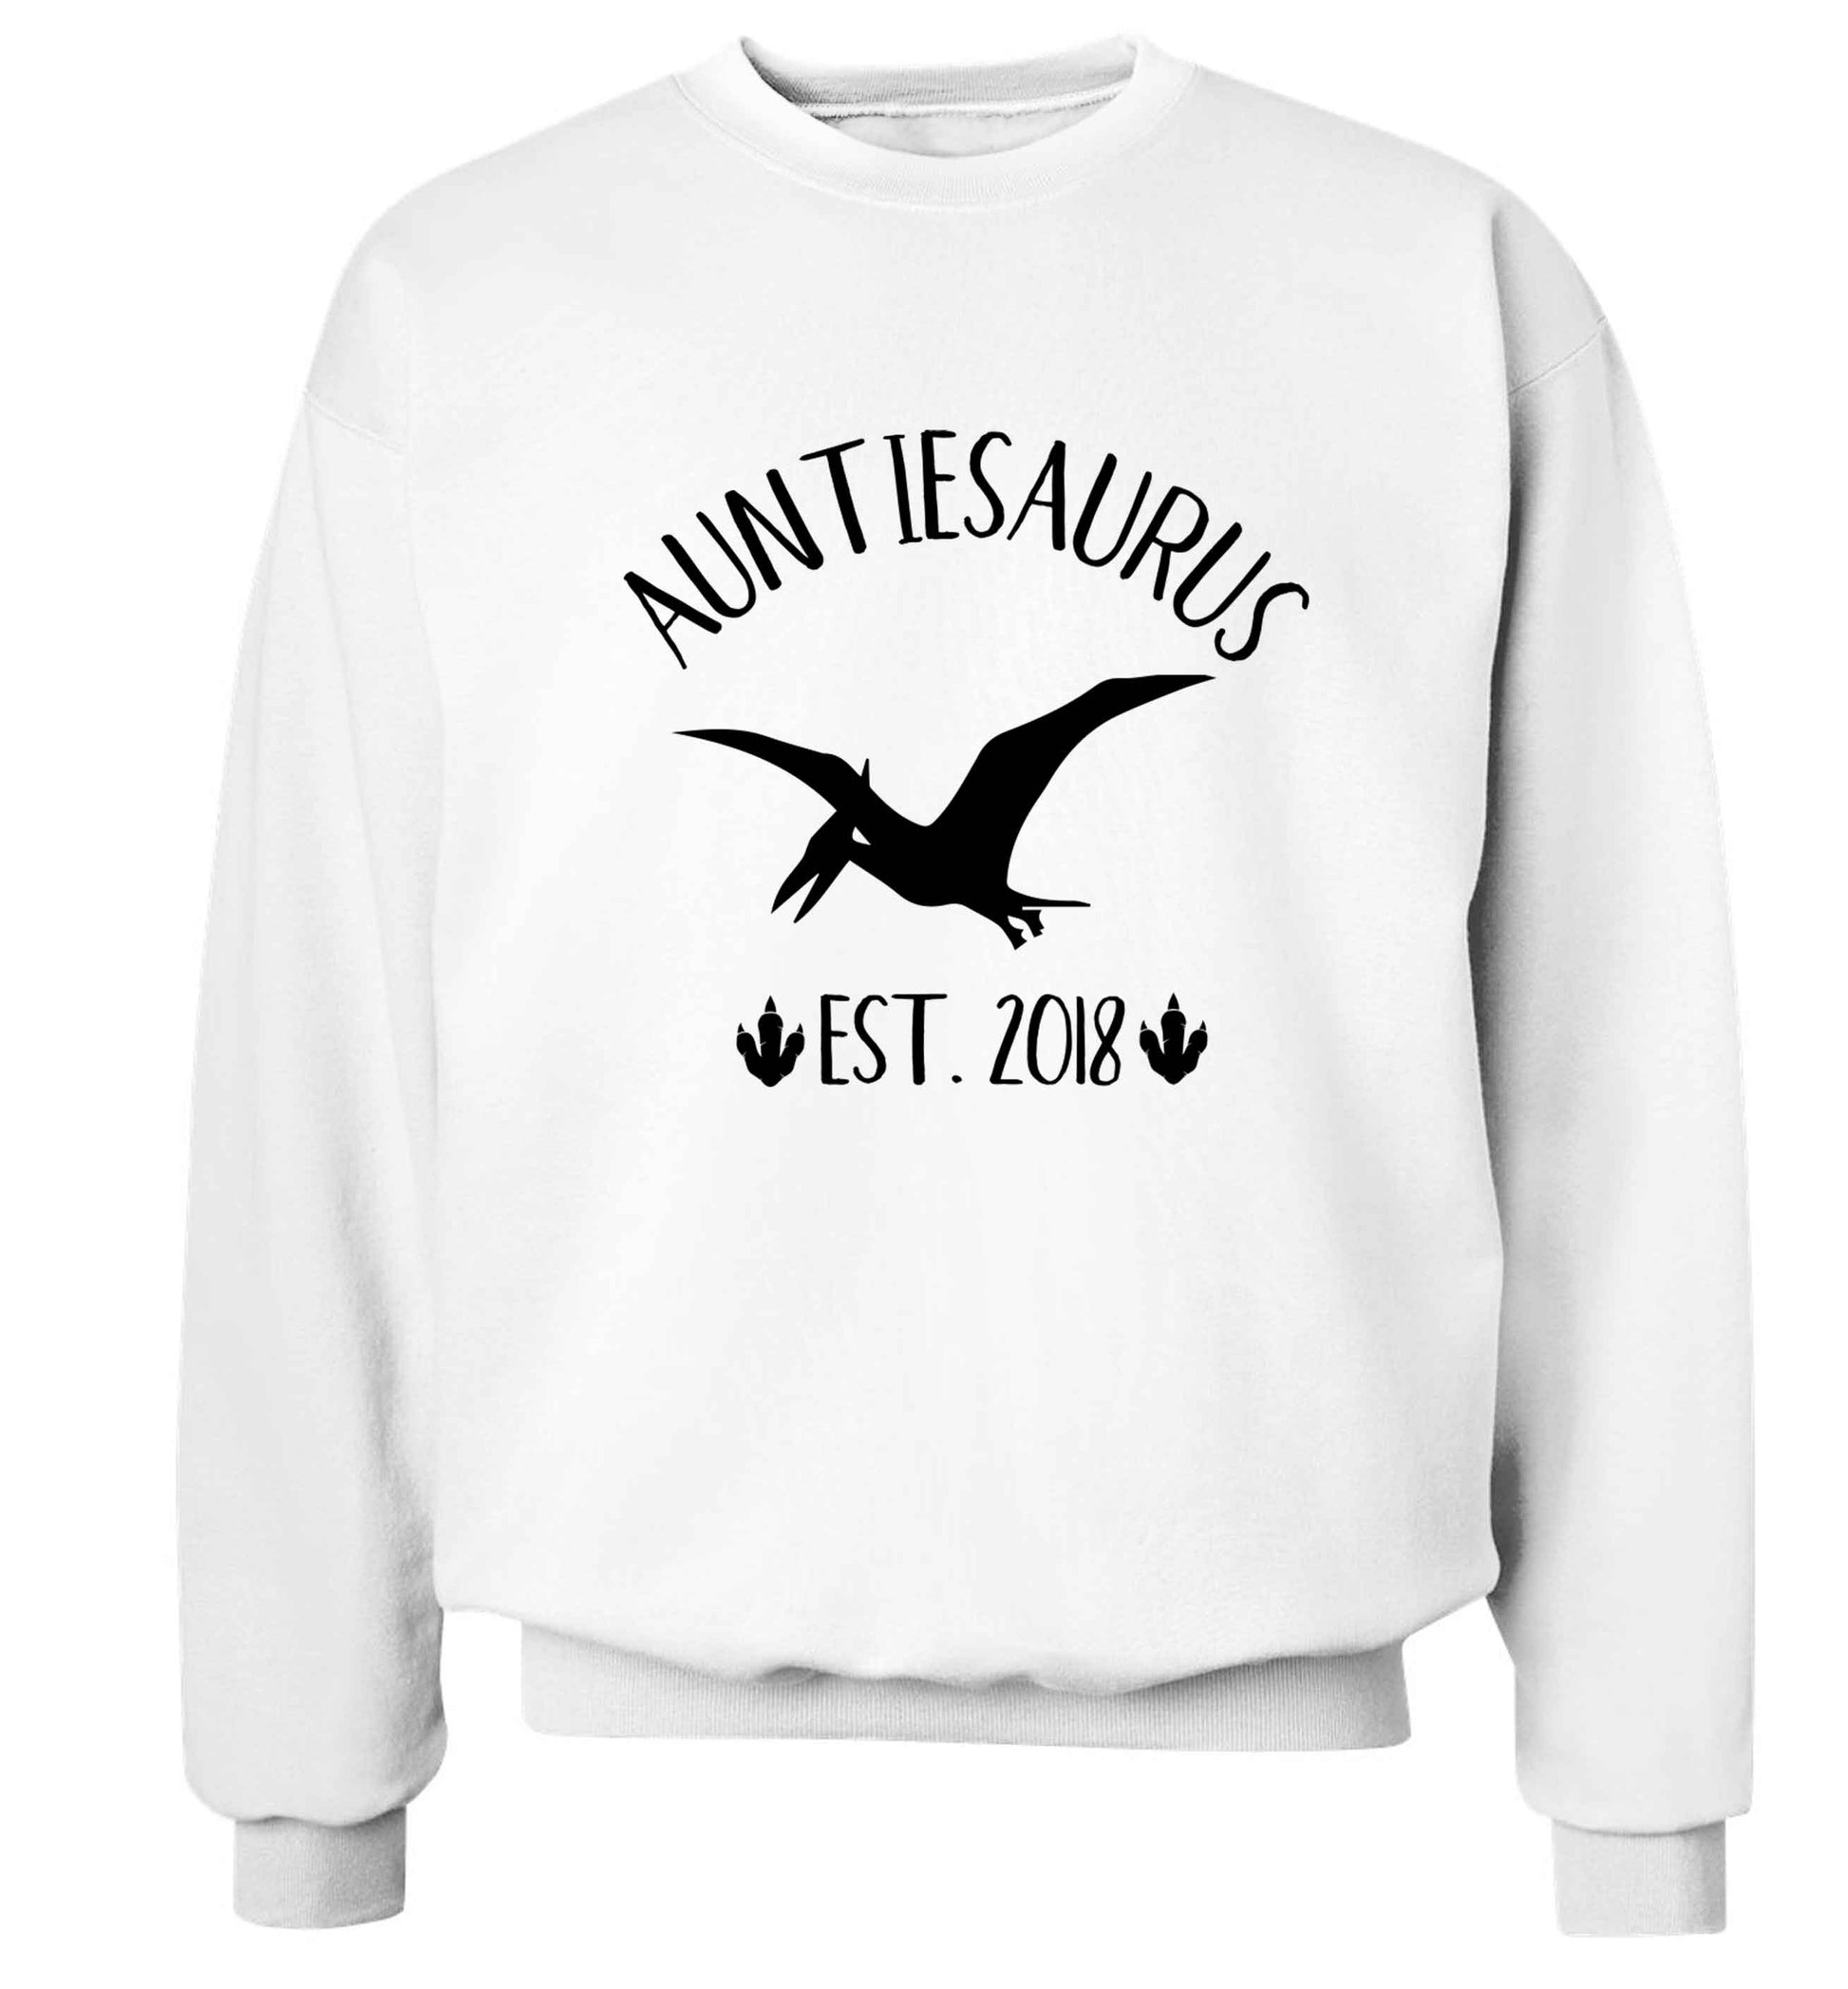 Personalised auntiesaurus since (custom date) Adult's unisex white Sweater 2XL